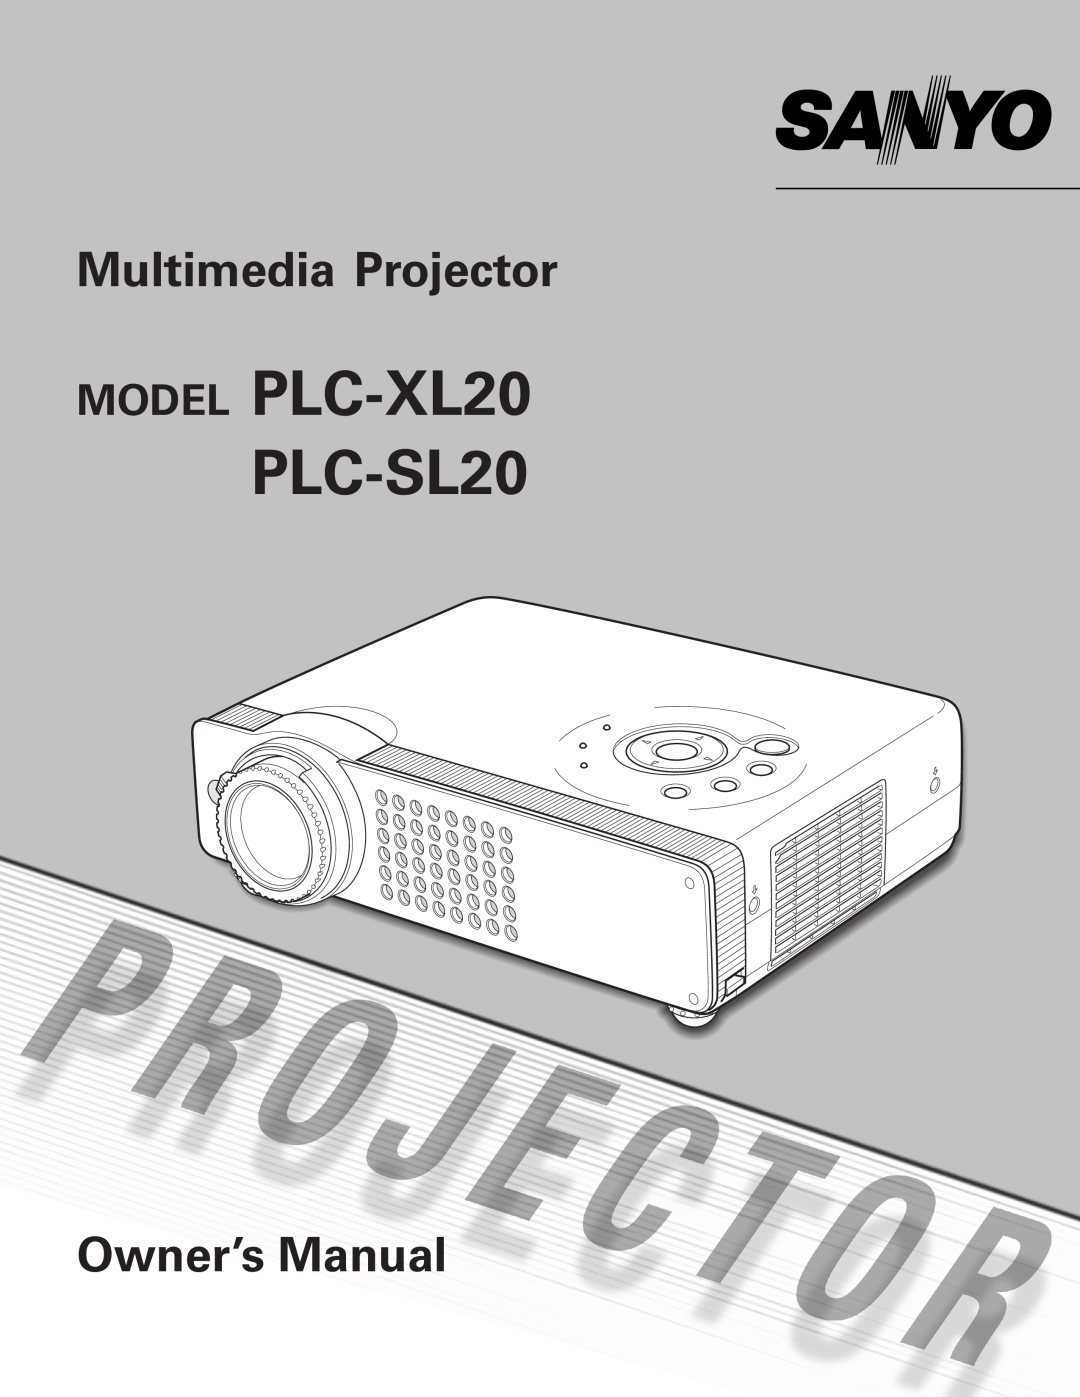 Sanyo owner manual MODEL PLC-XL20 PLC-SL20, Multimedia Projector, Owner’s Manual 